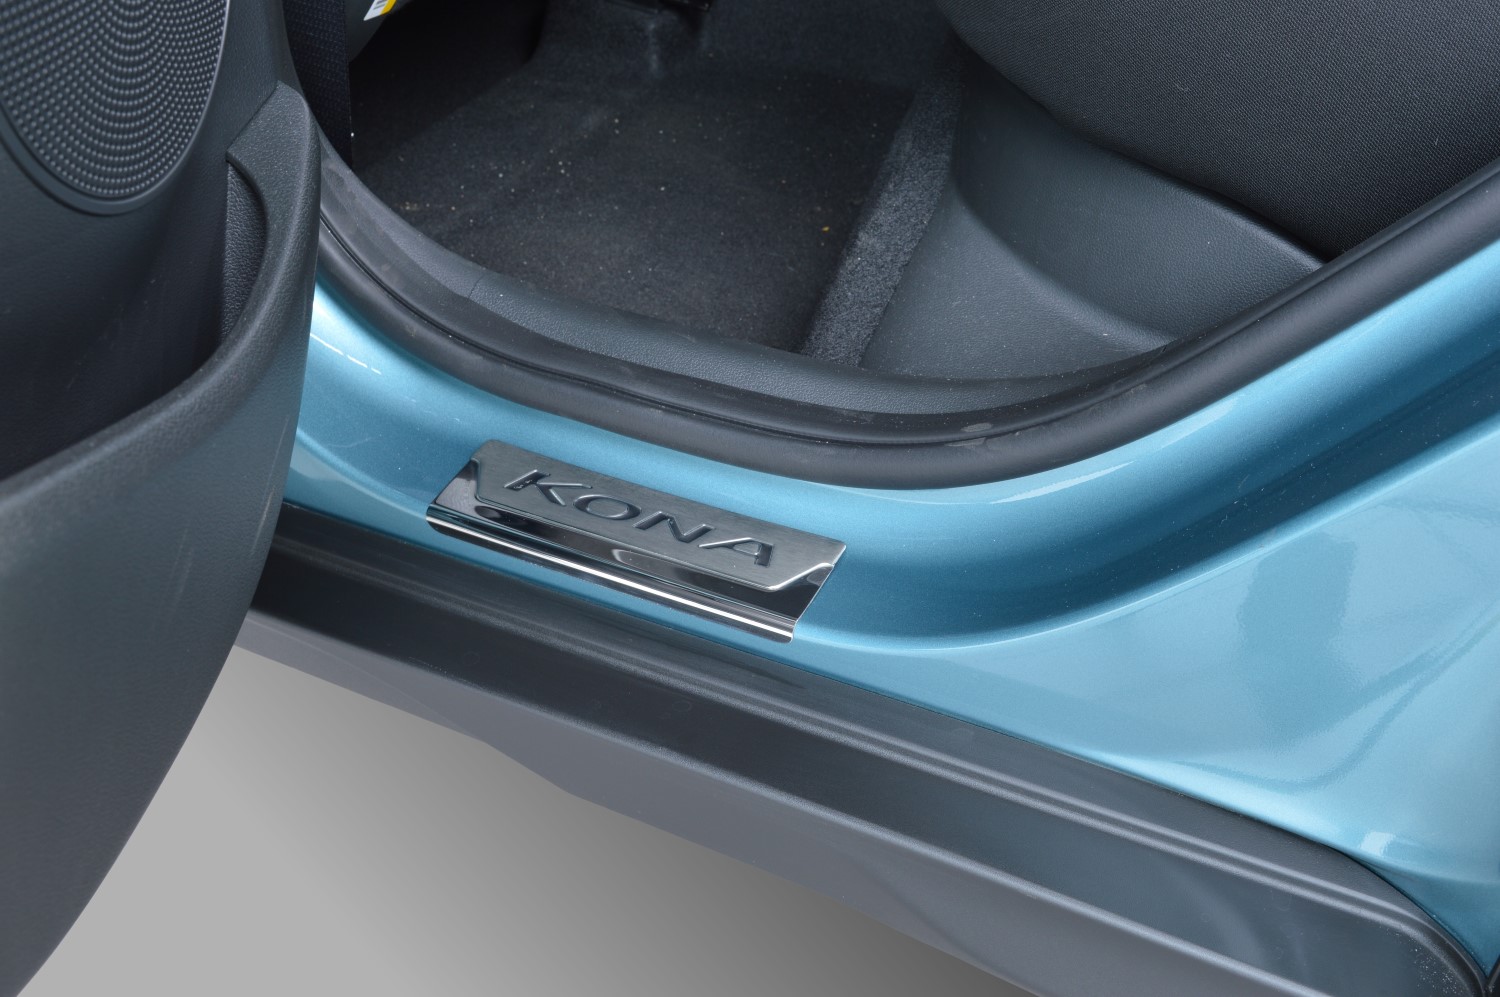 Hyundai Kona EV Frunk with Transport box (box + stainless steel sheet + 4  feets)